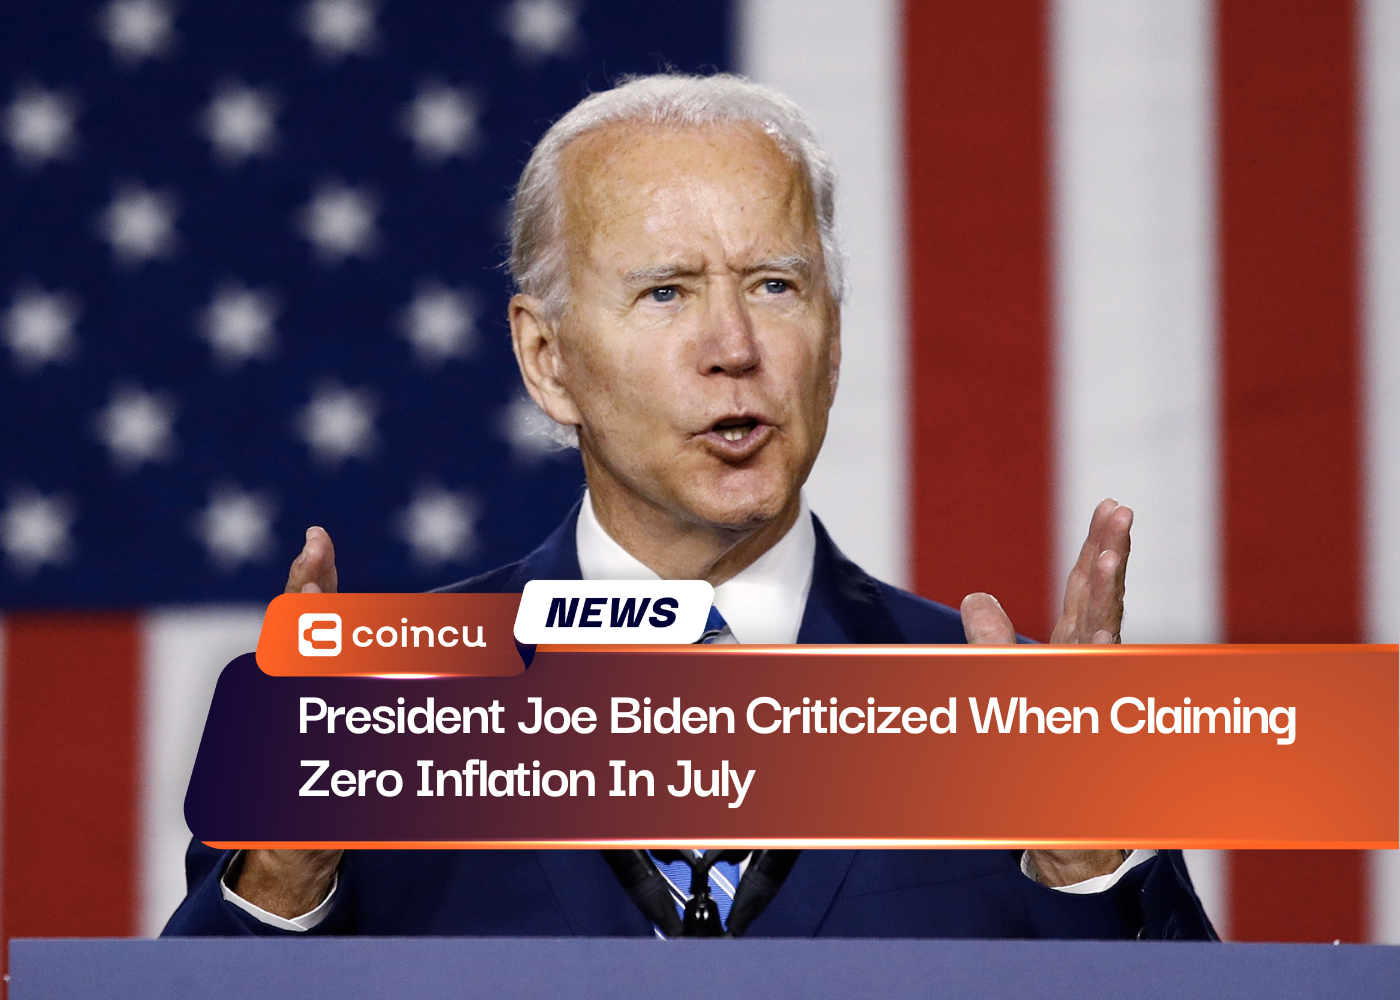 President Joe Biden Criticized When Claiming Zero Inflation In July